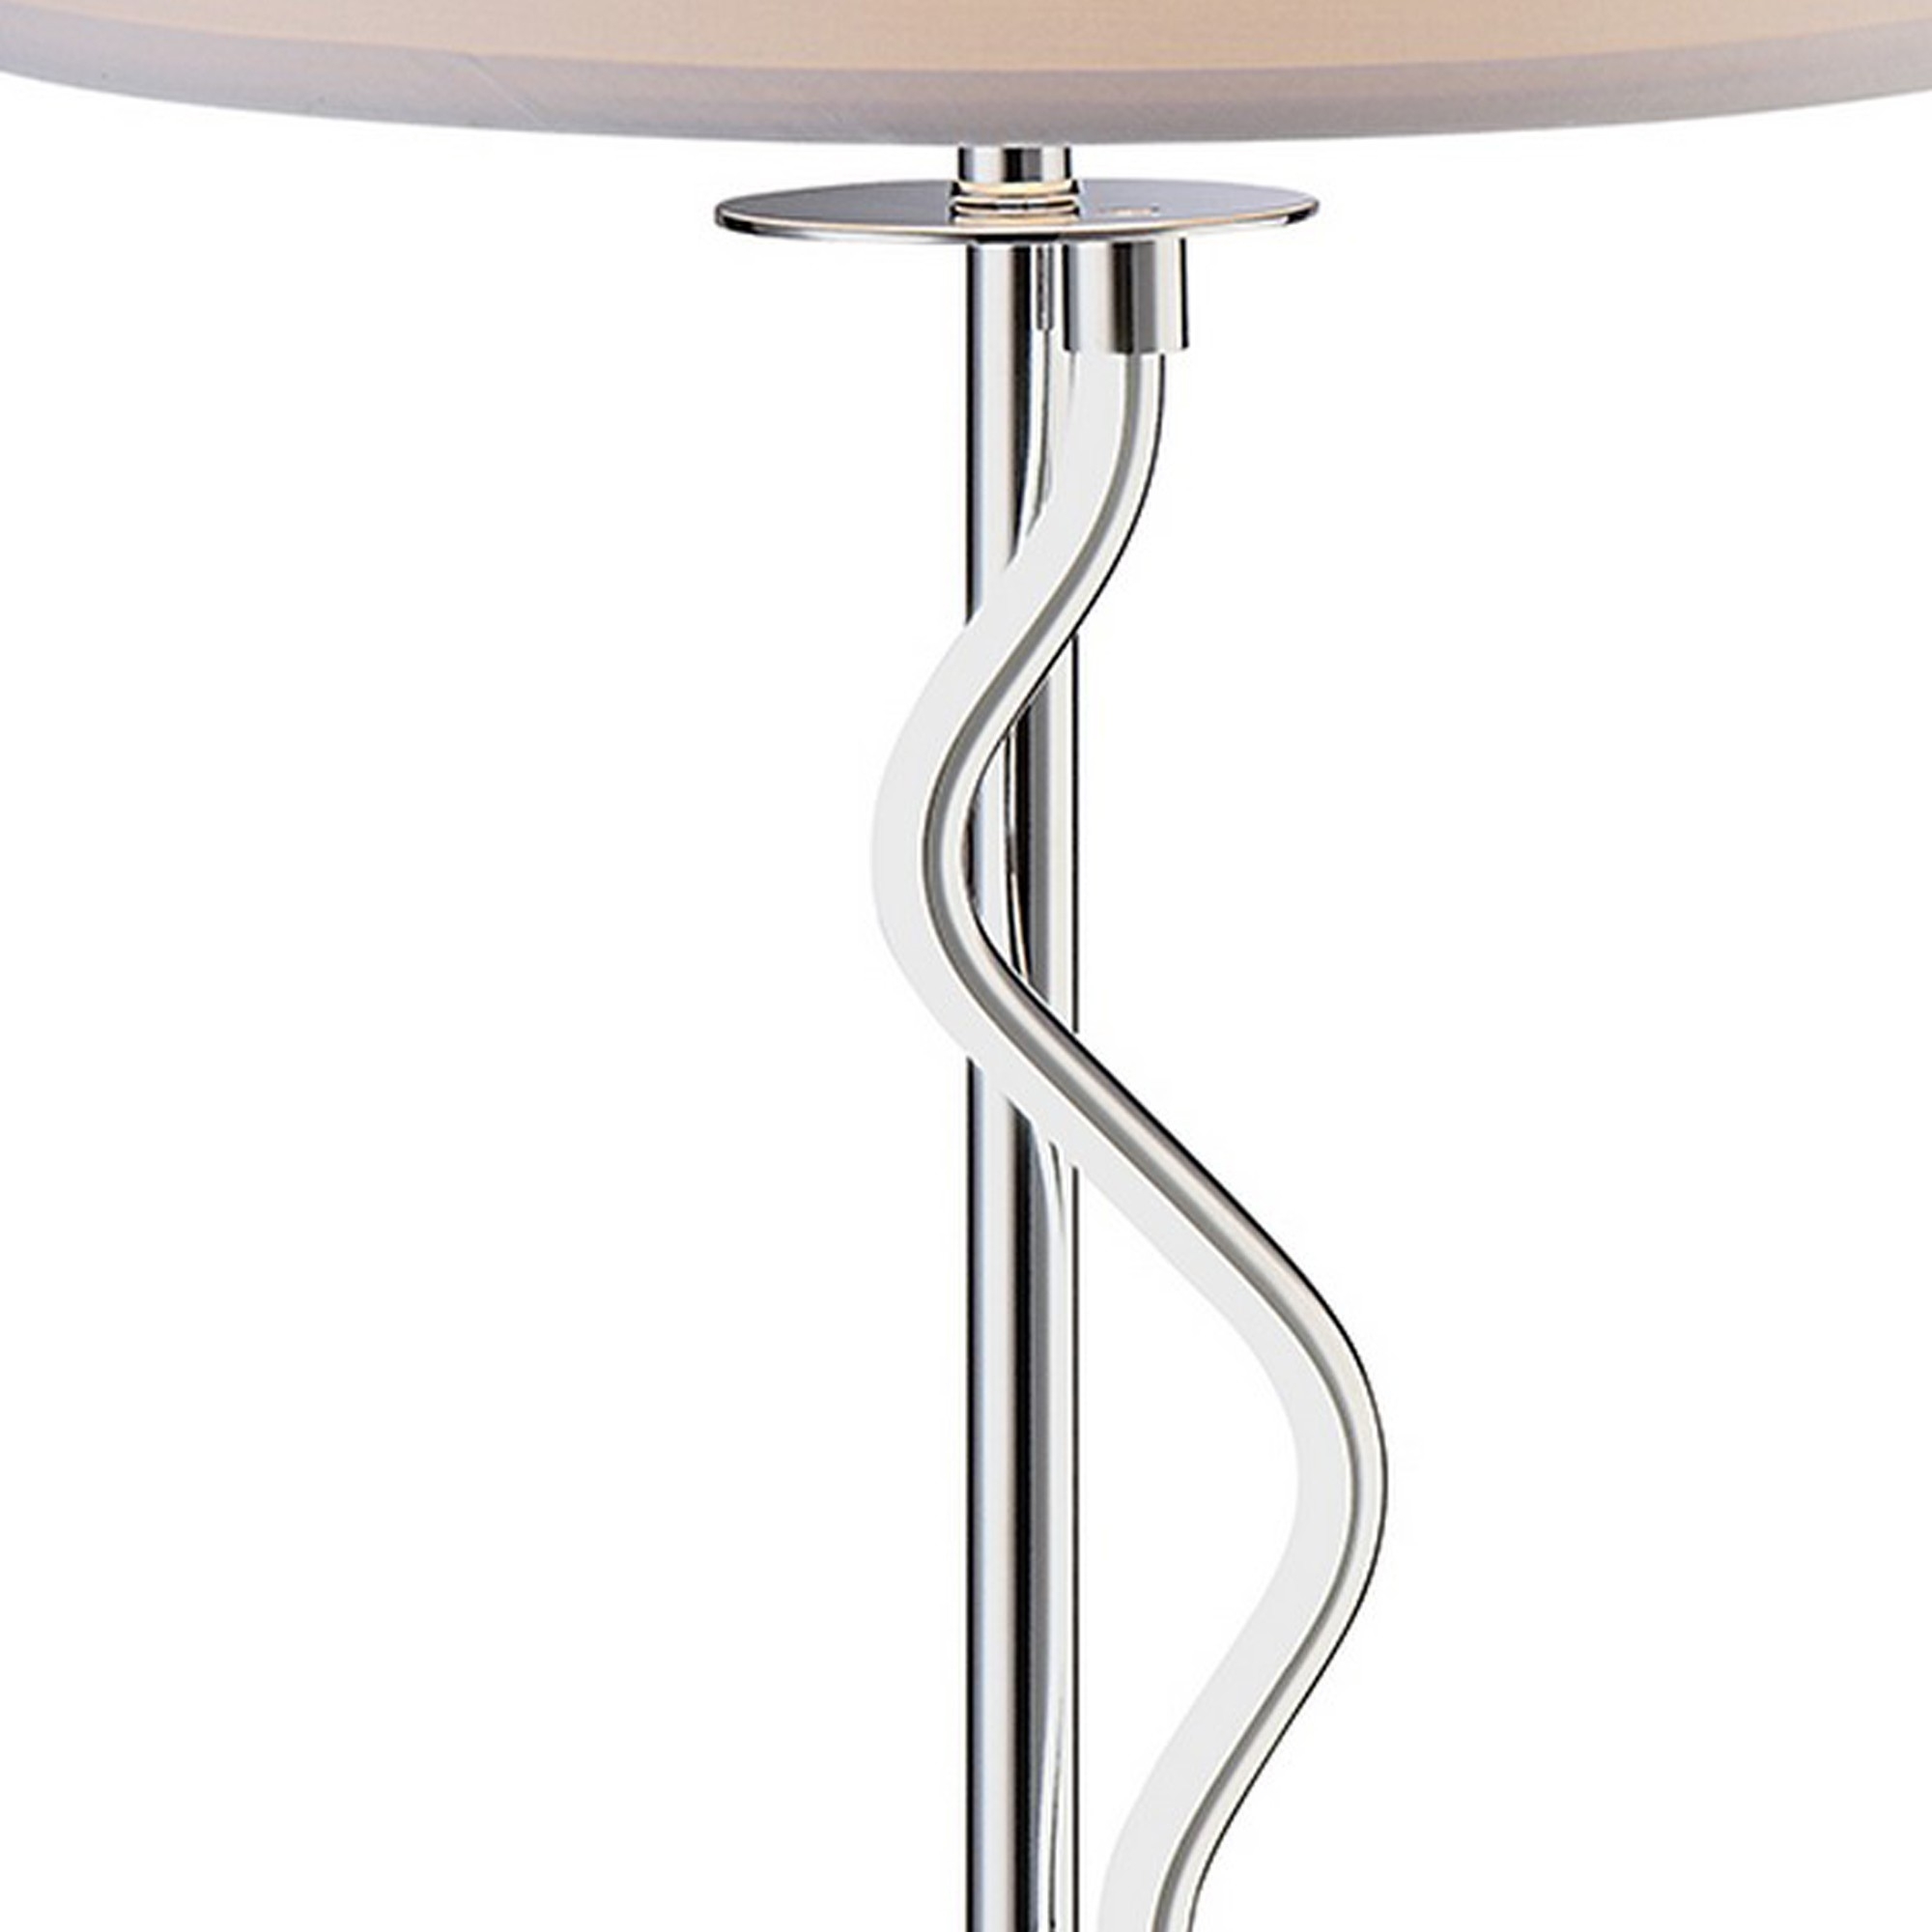 30 Inch Table Lamp, White Drum Fabric Shade, Modern Round Chrome Base -Saltoro Sherpi